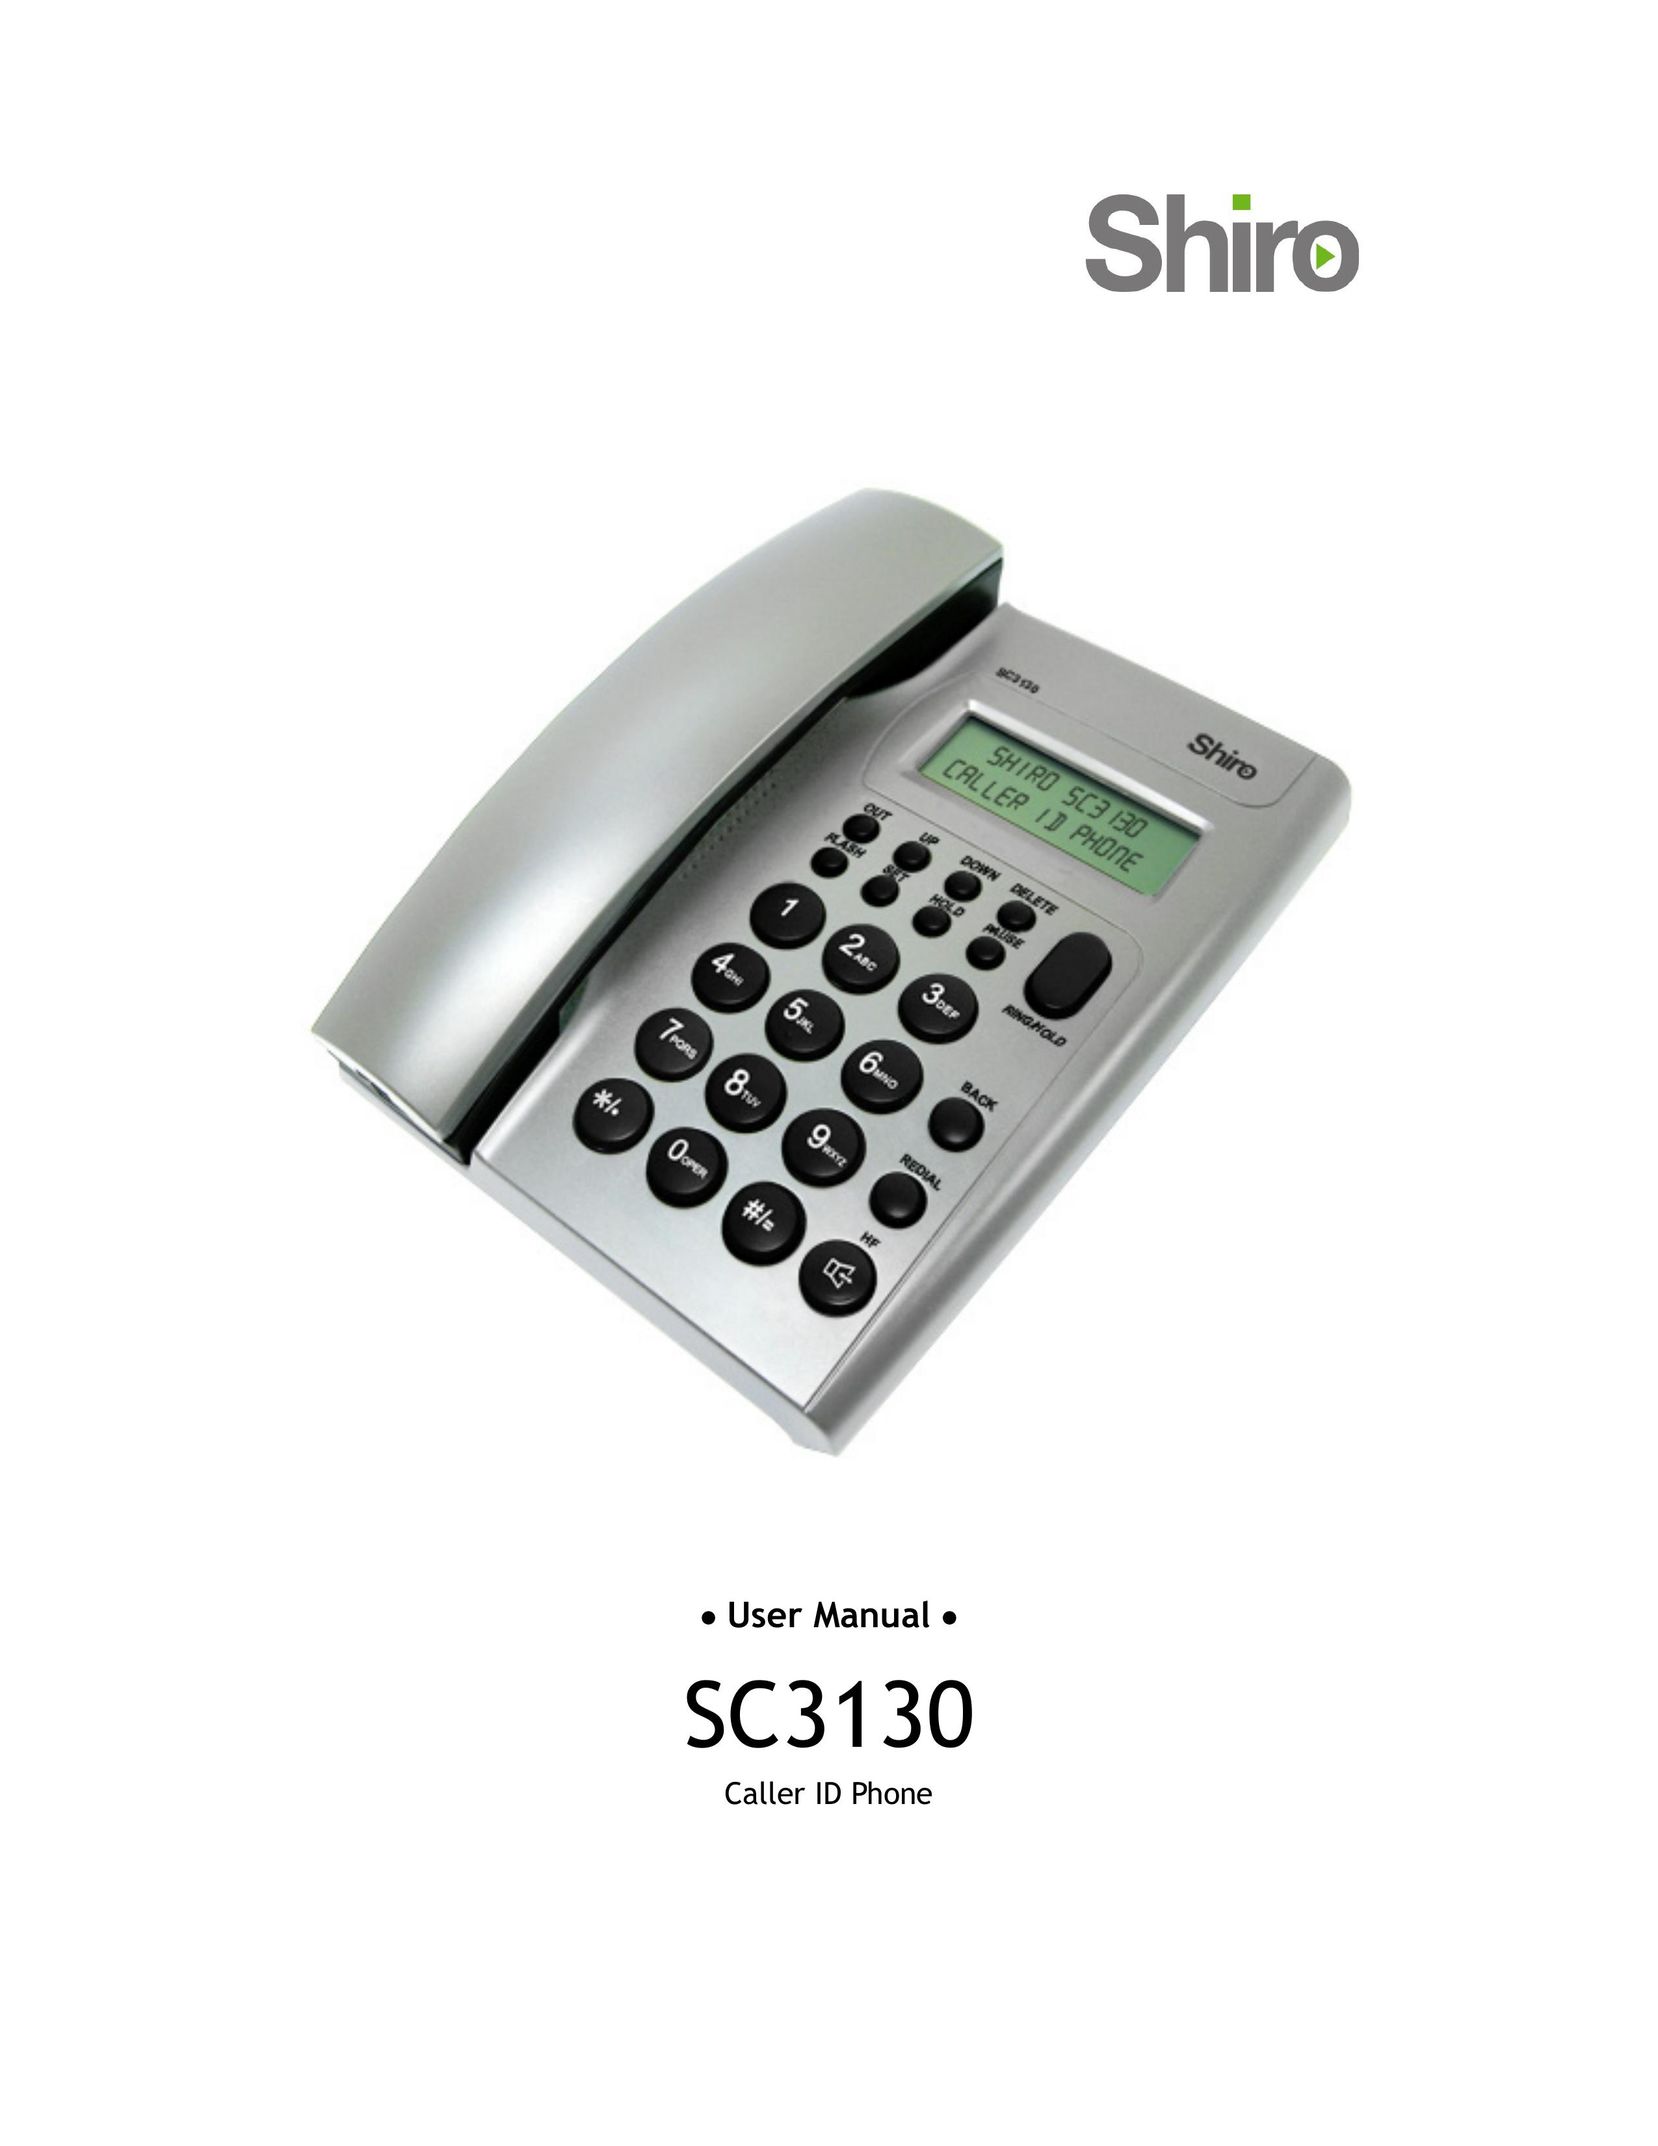 Shiro SC3130 Telephone User Manual